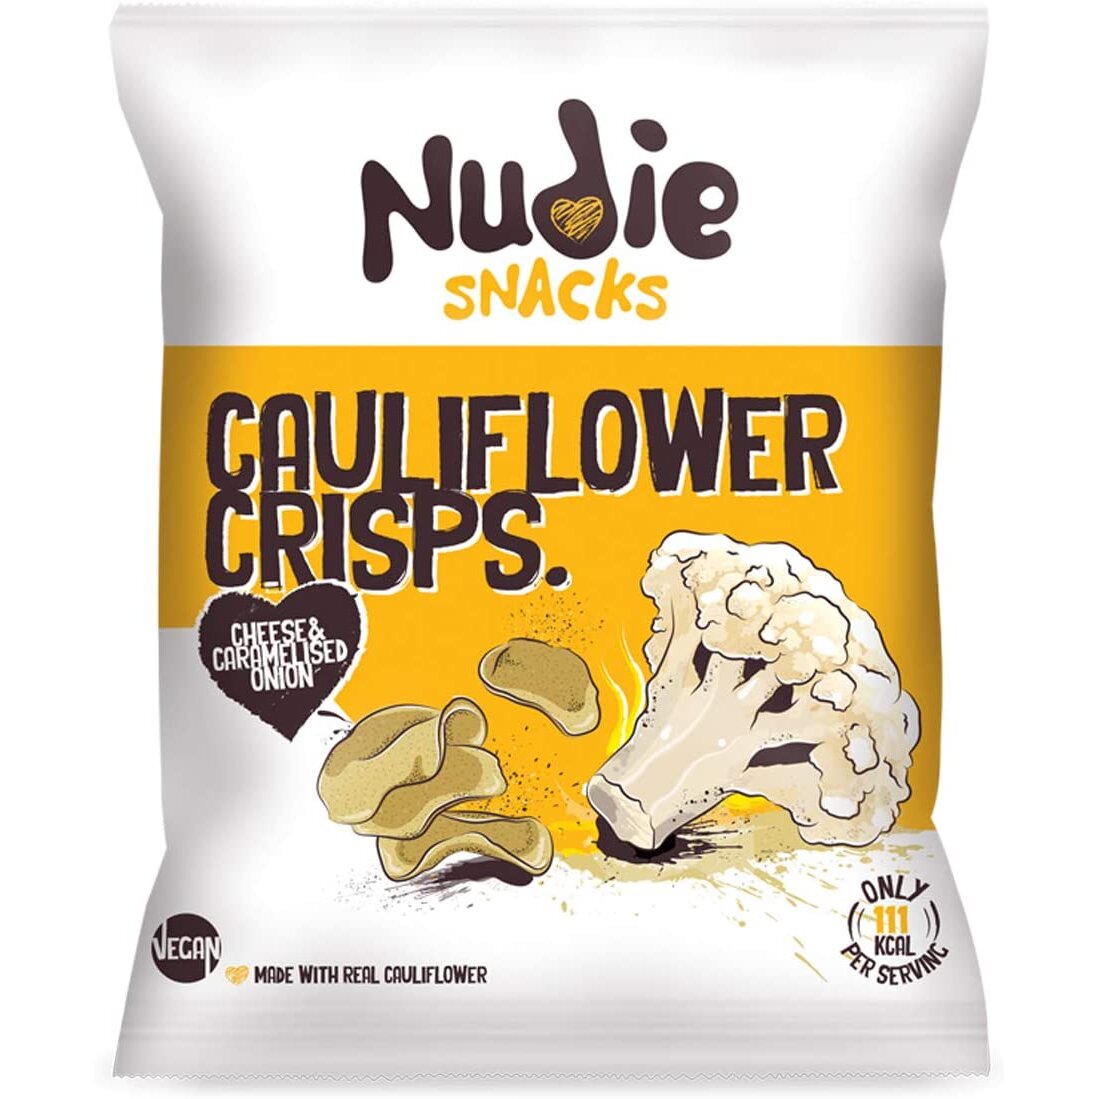 Nudie Snacks Cheese & Caramelised Onion Cauliflower Crisps 80g (Pack of 16)